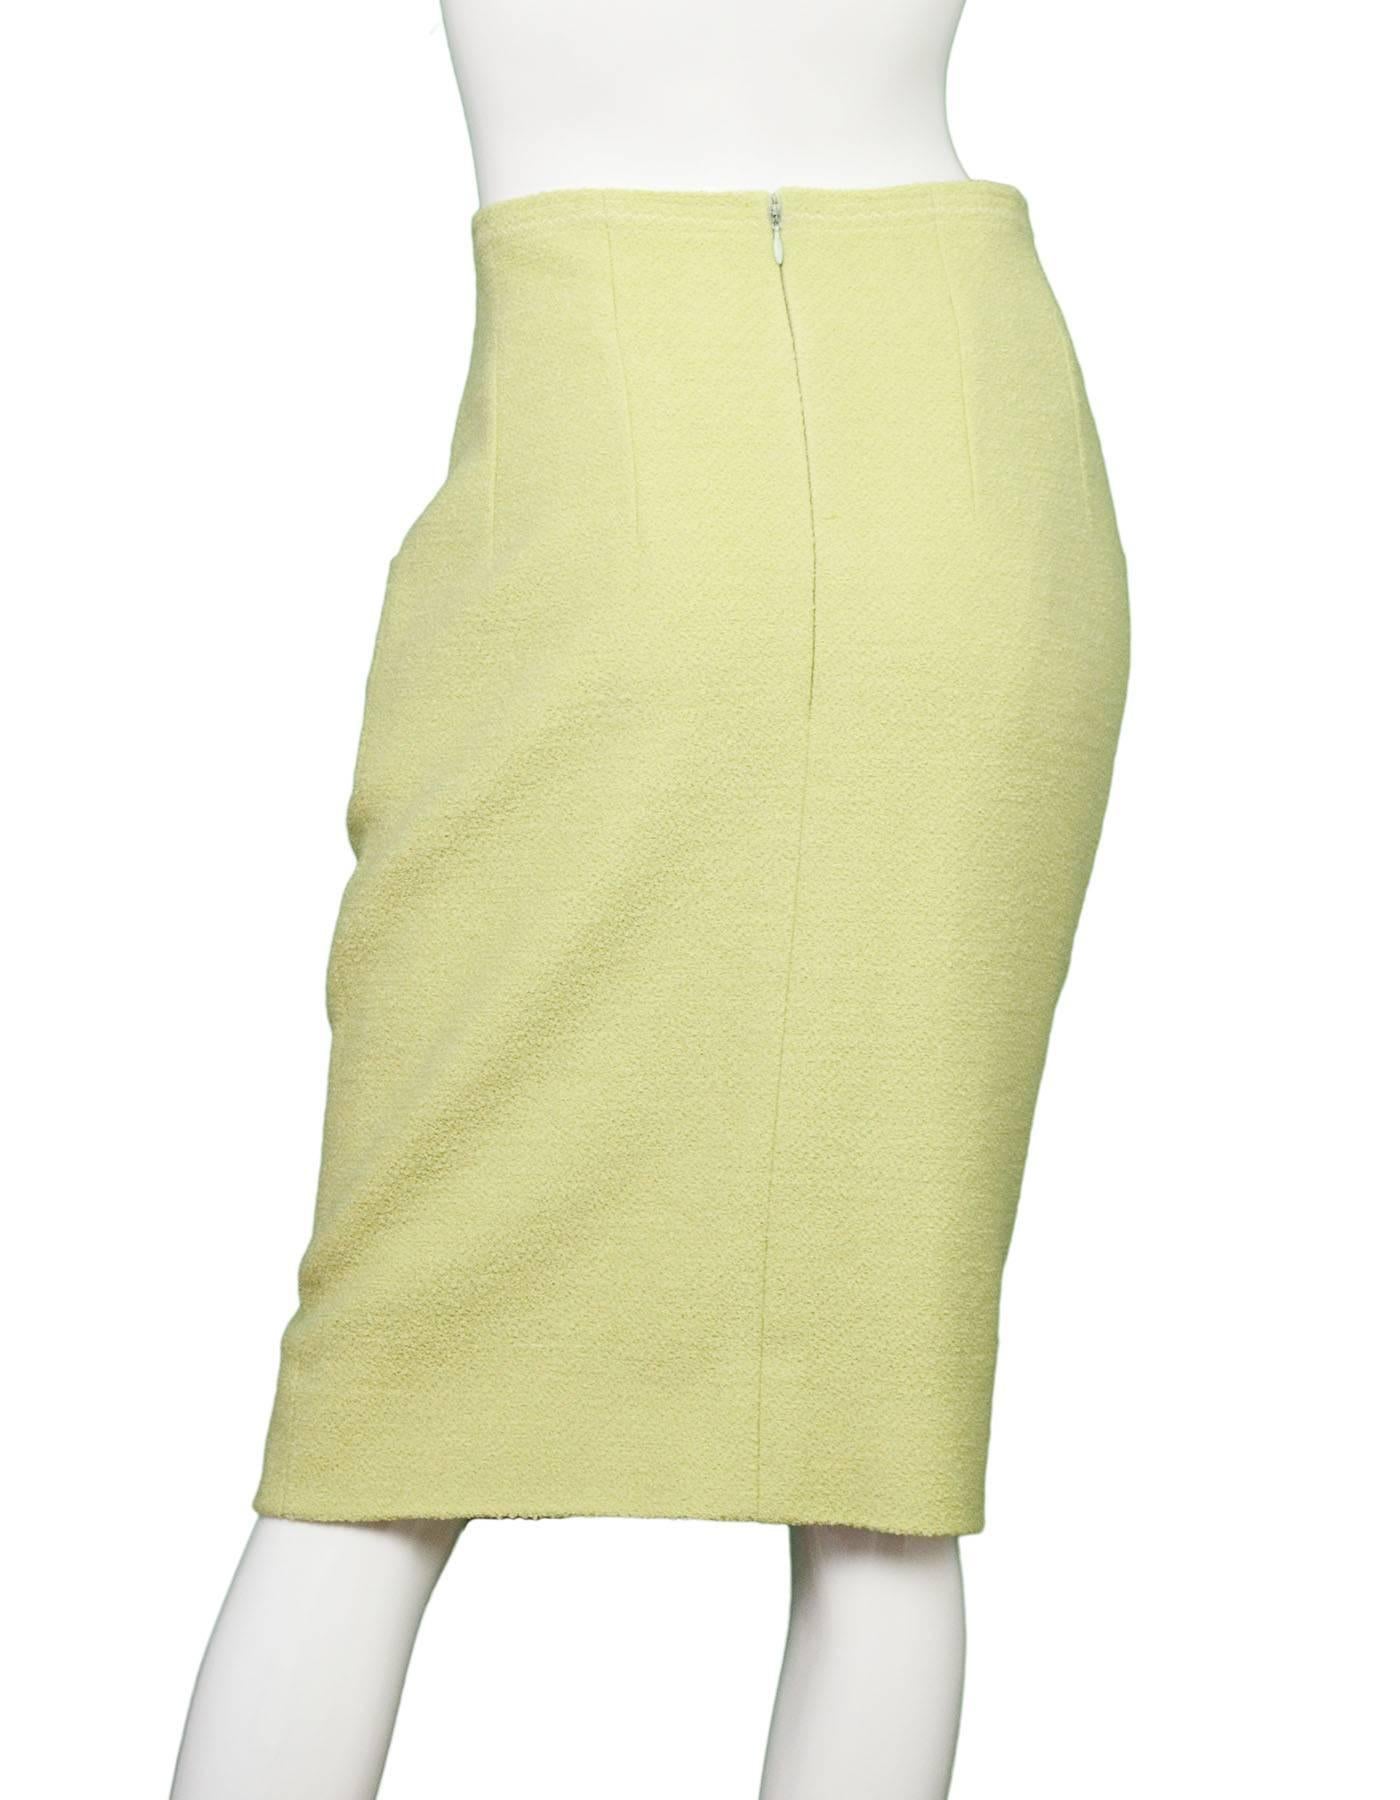 Beige Chanel Chartreuse Boucle Skirt sz M